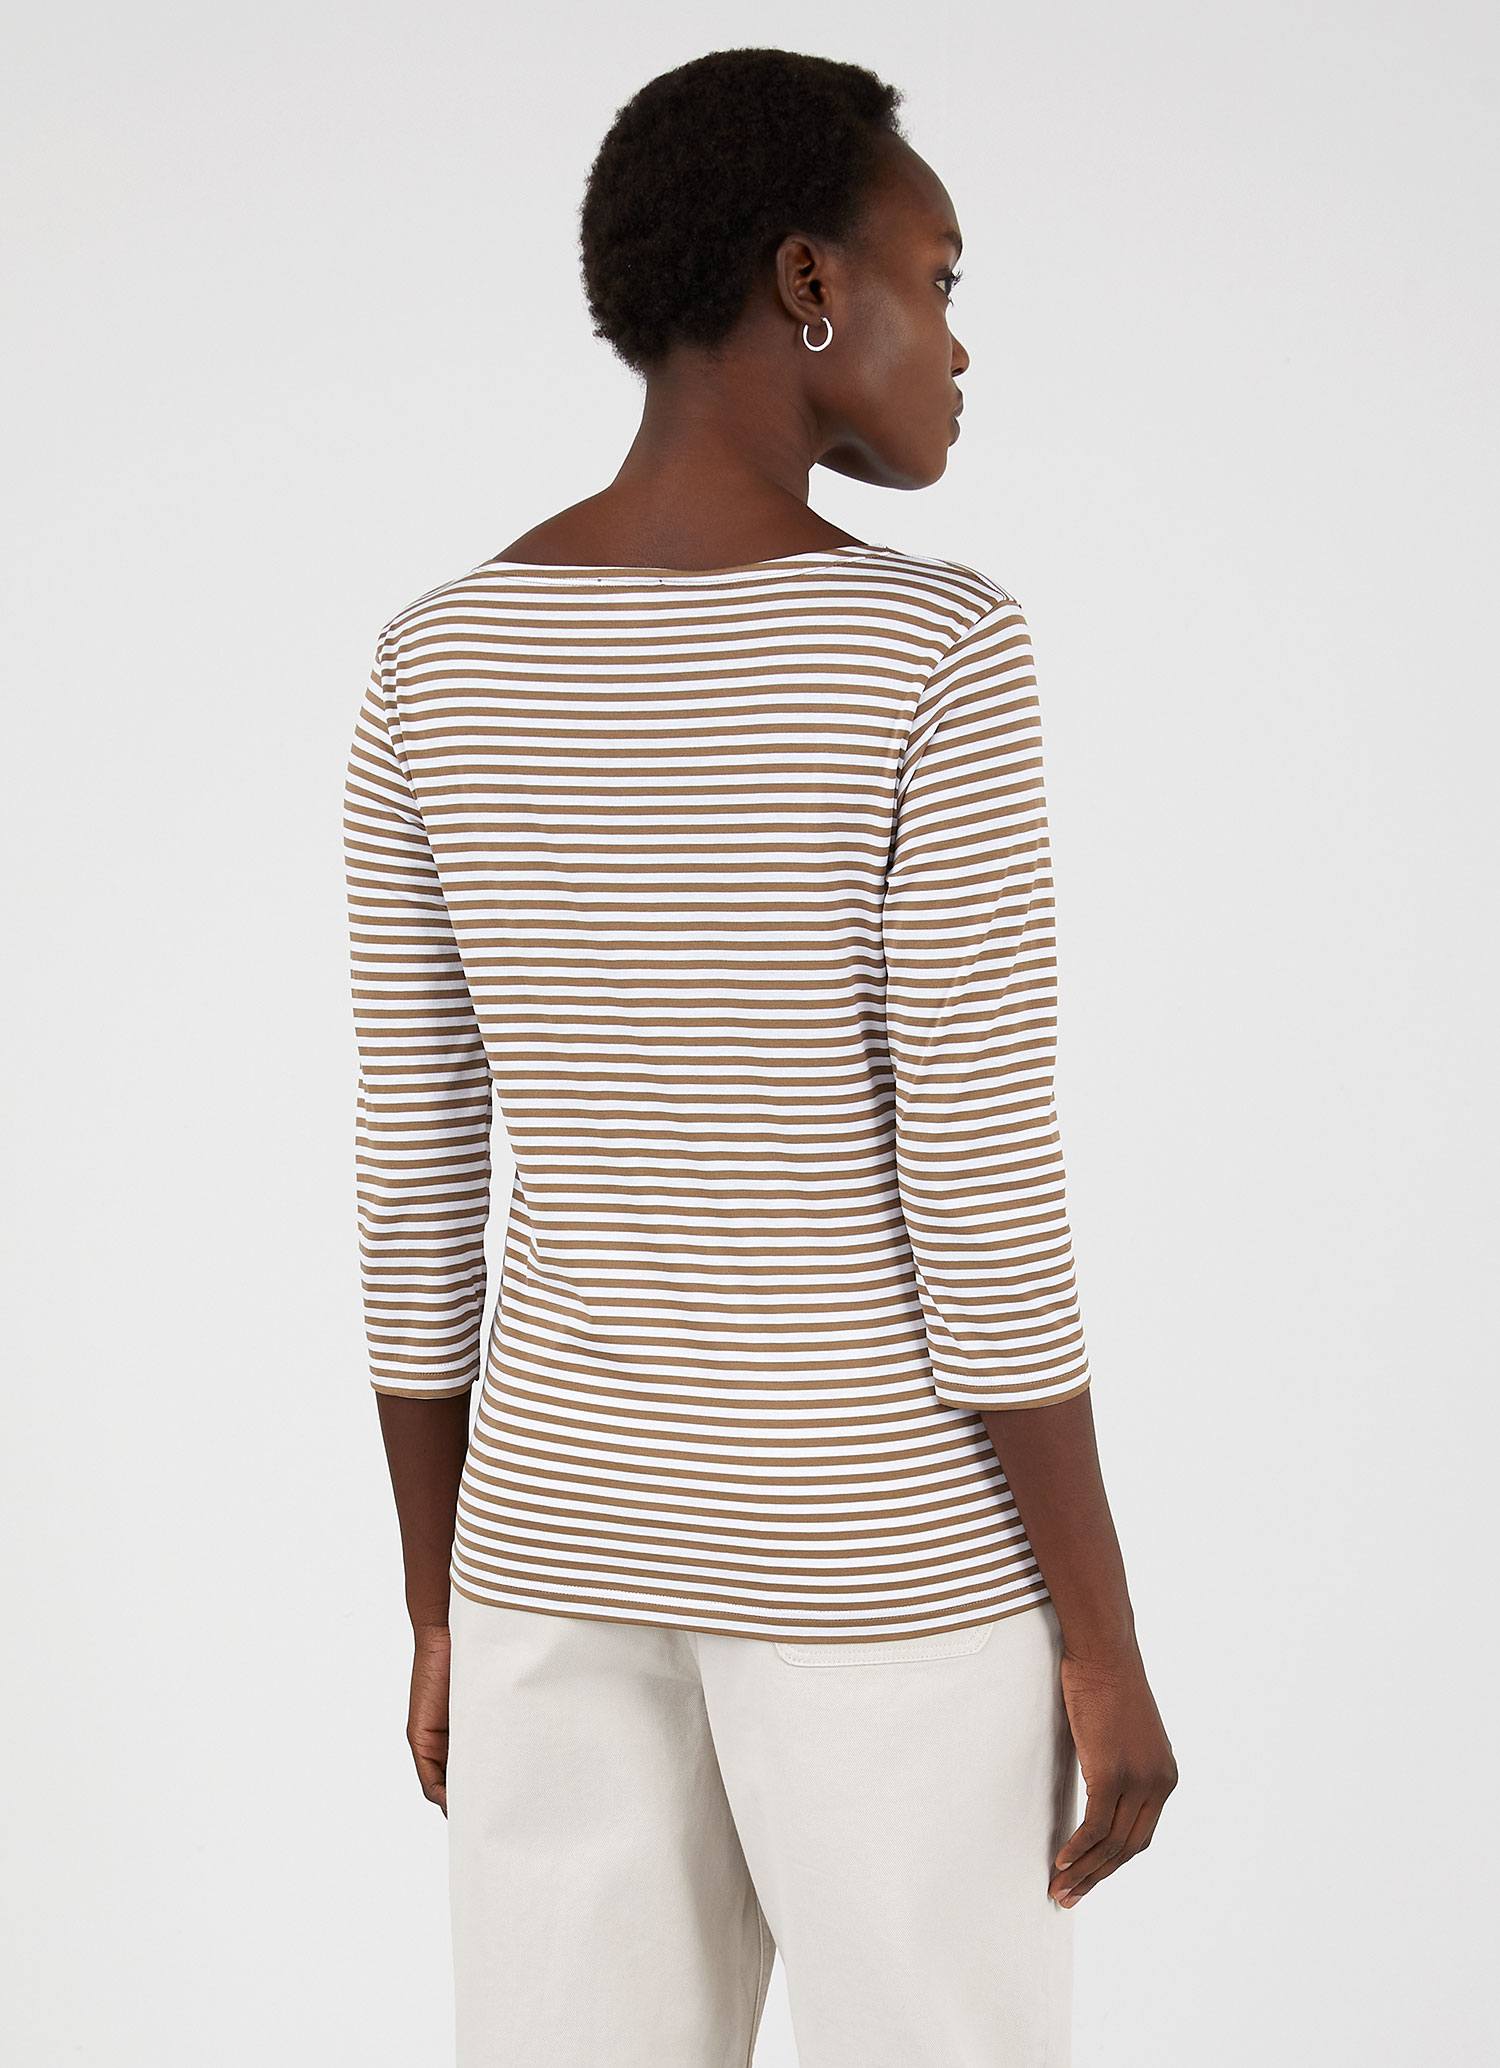 Women's Boat Neck T-shirt in Dark Tan/White English Stripe